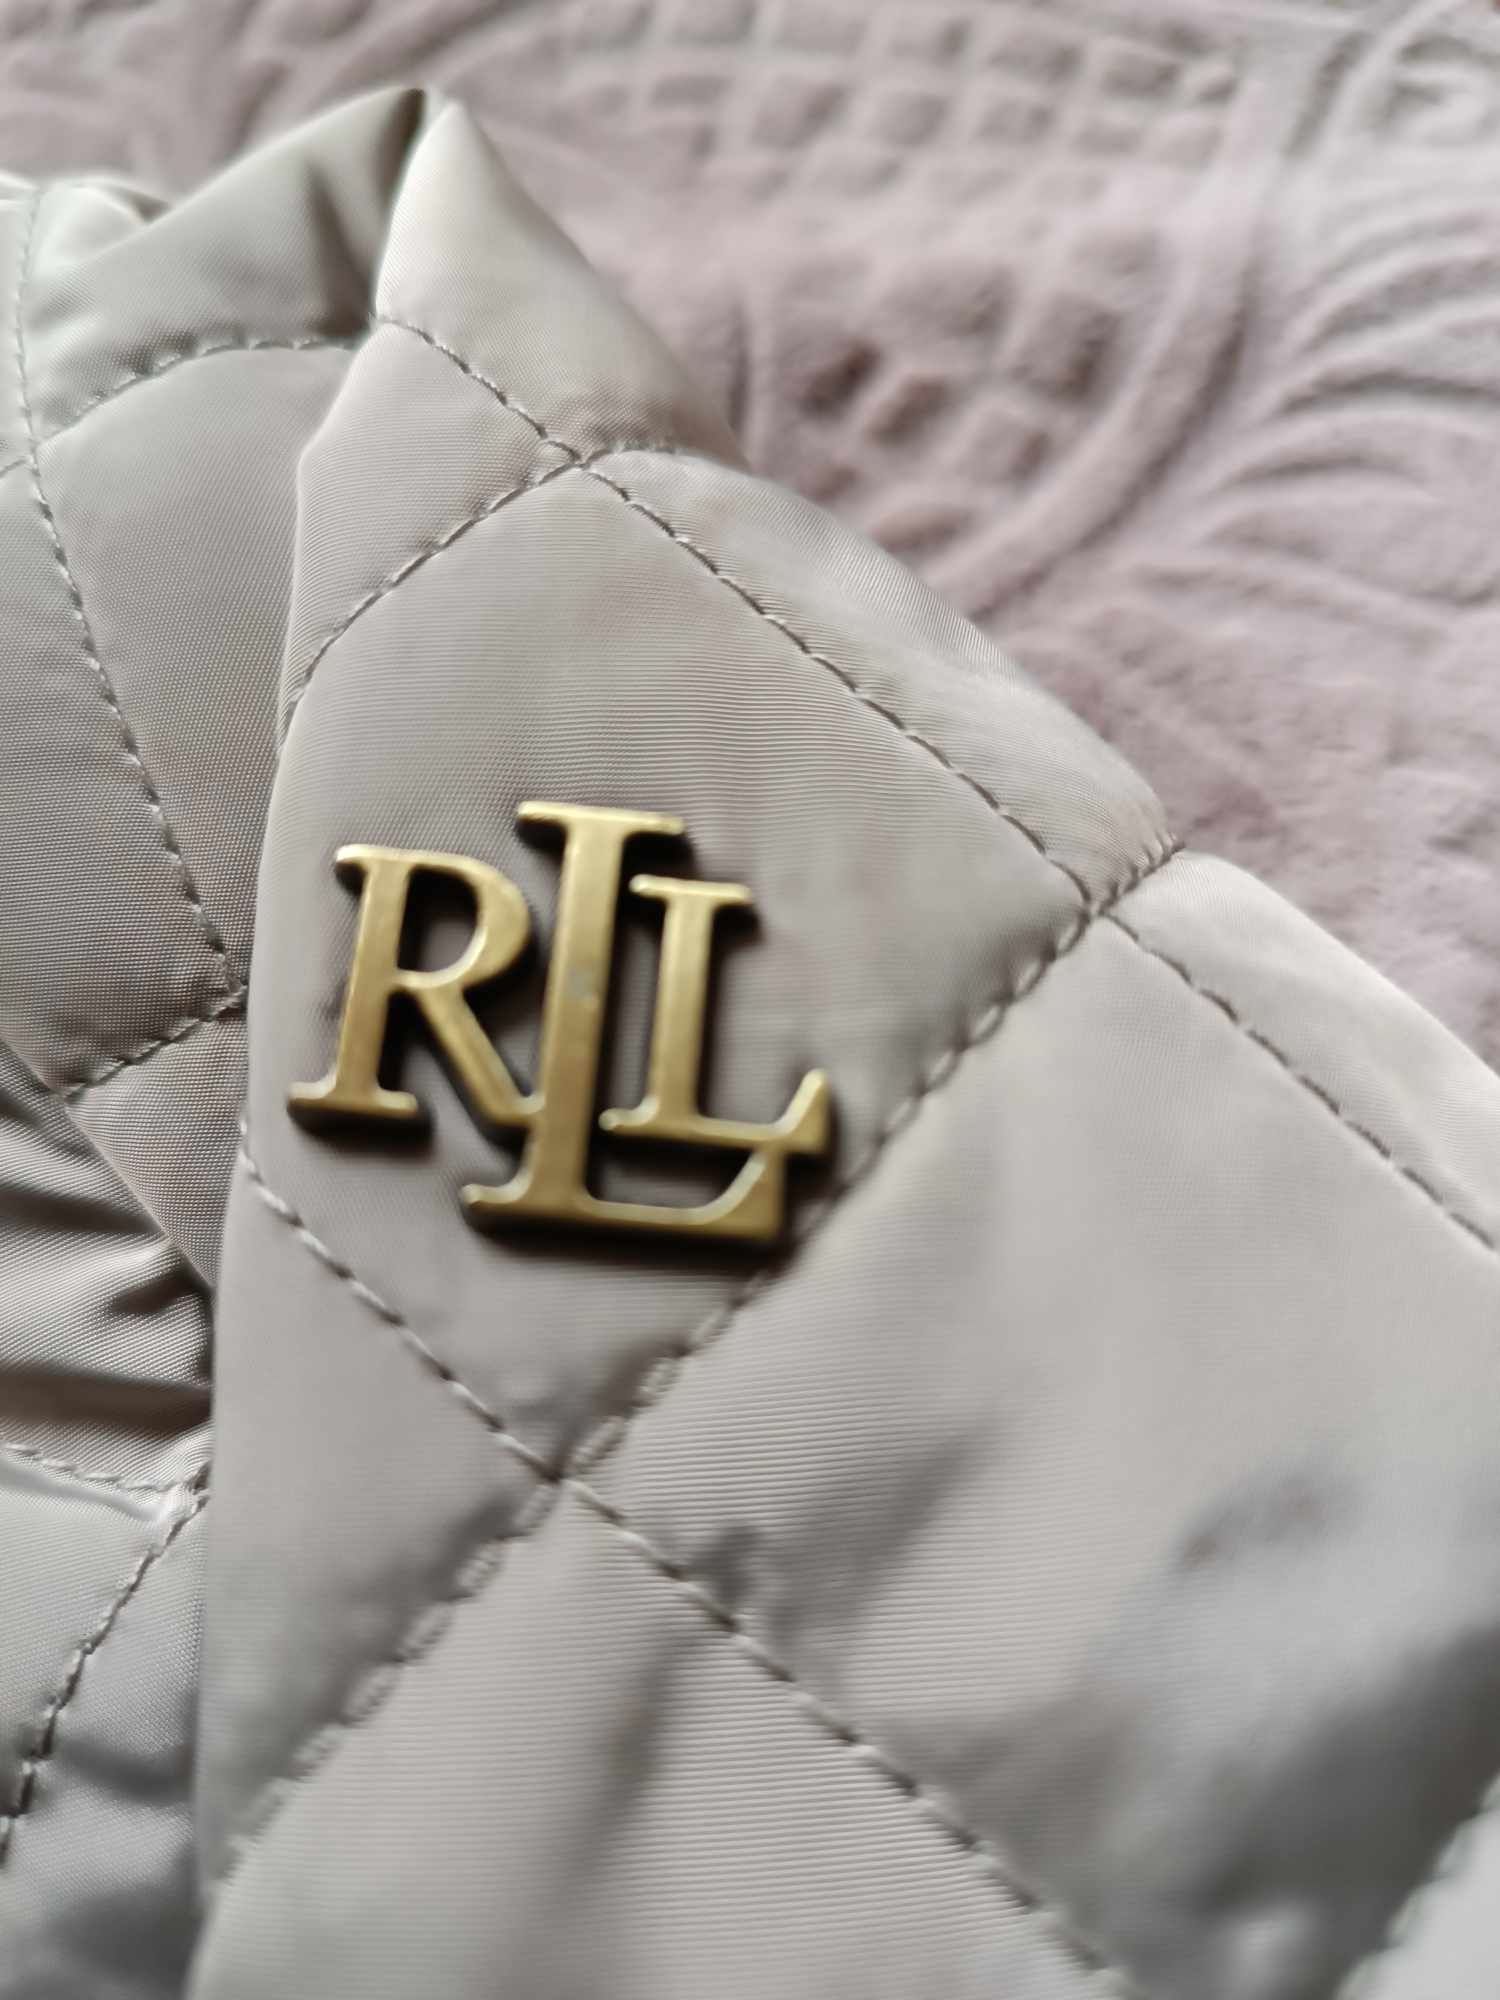 Ralph Lauren kurtka pikowana beżowa kremowa ecru M 38 vintage